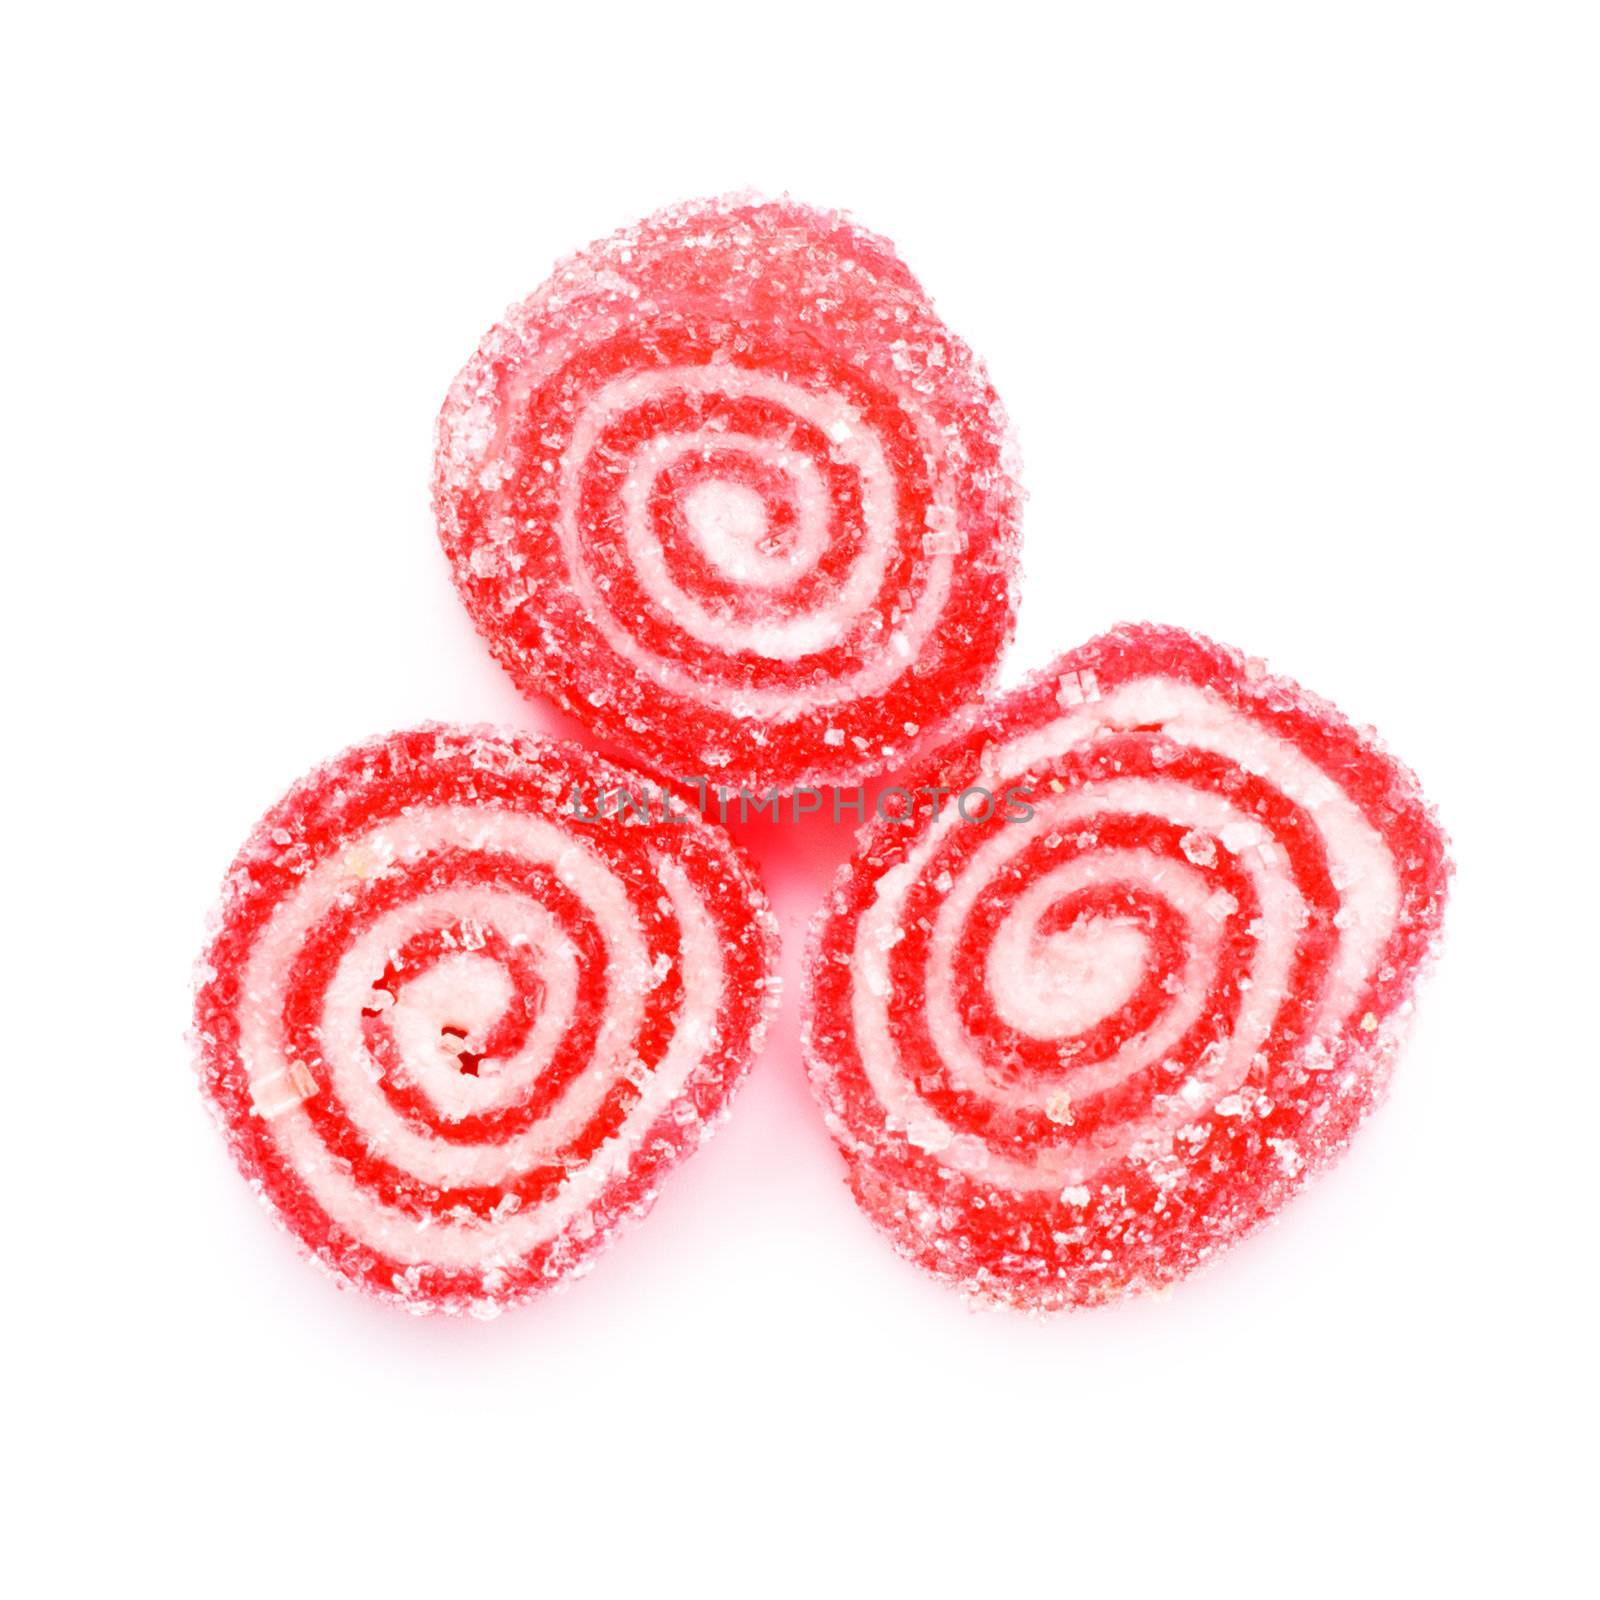 Spiral Gelatin Sweets by petr_malyshev